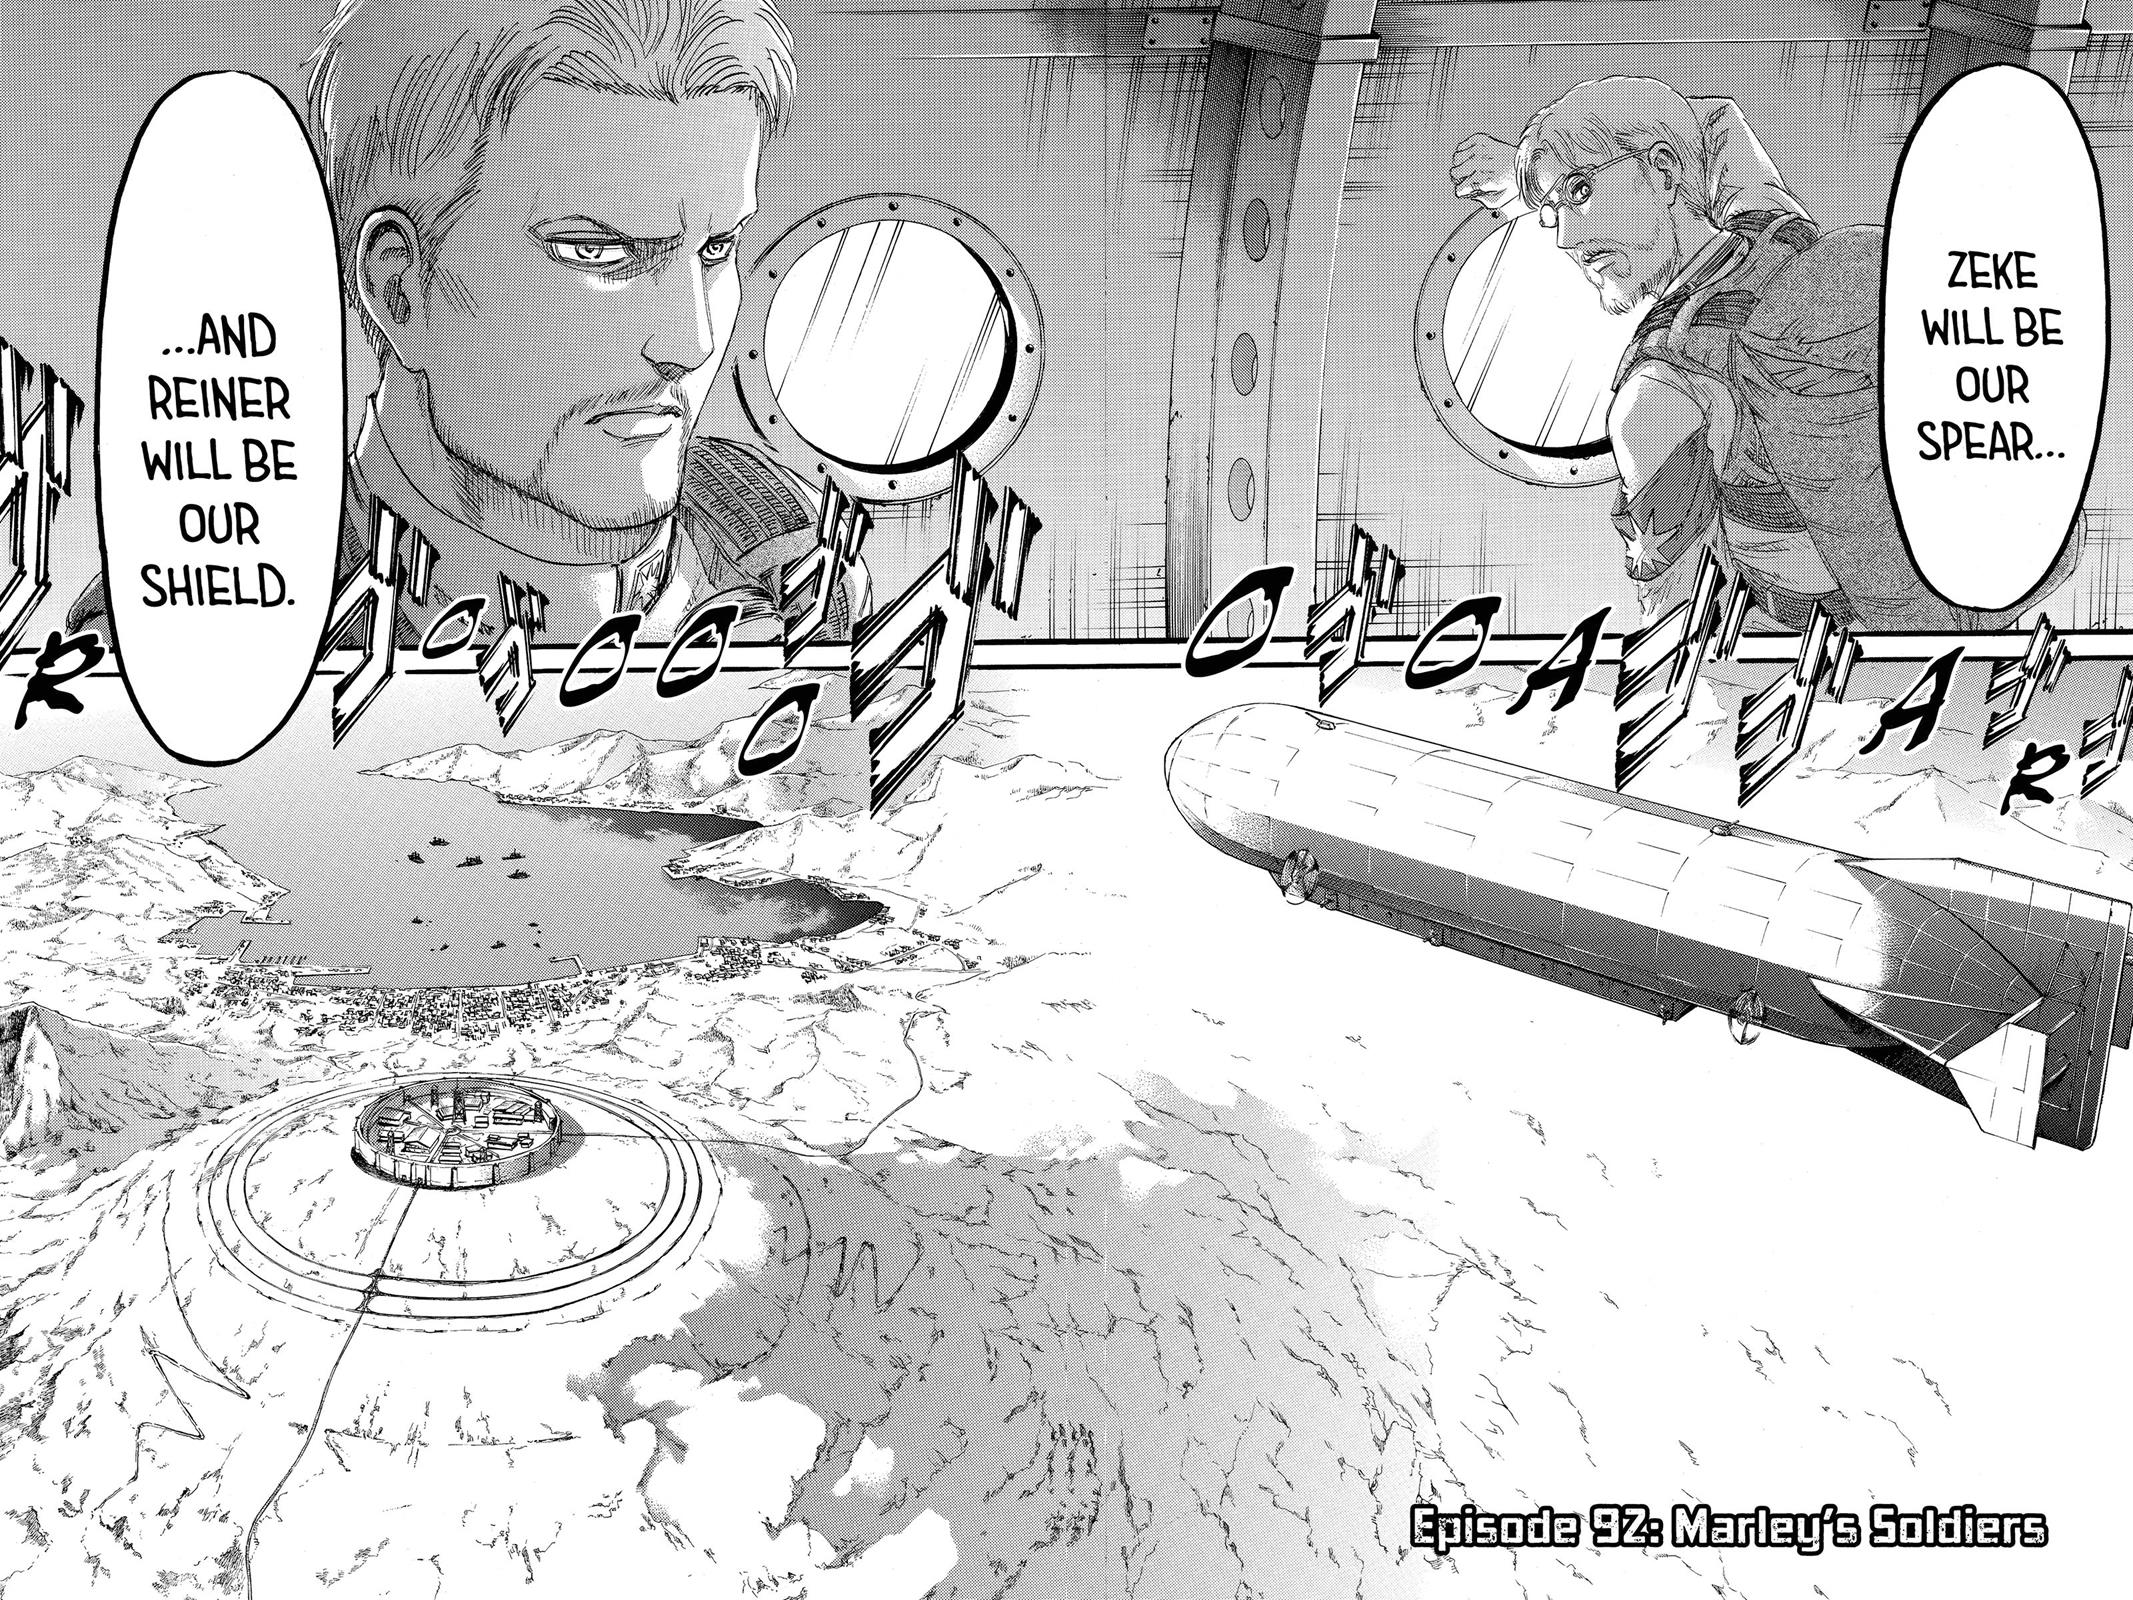 Shingeki no Kyojin, Episode 138  TcbScans Net - TCBscans - Free Manga  Online in High Quality